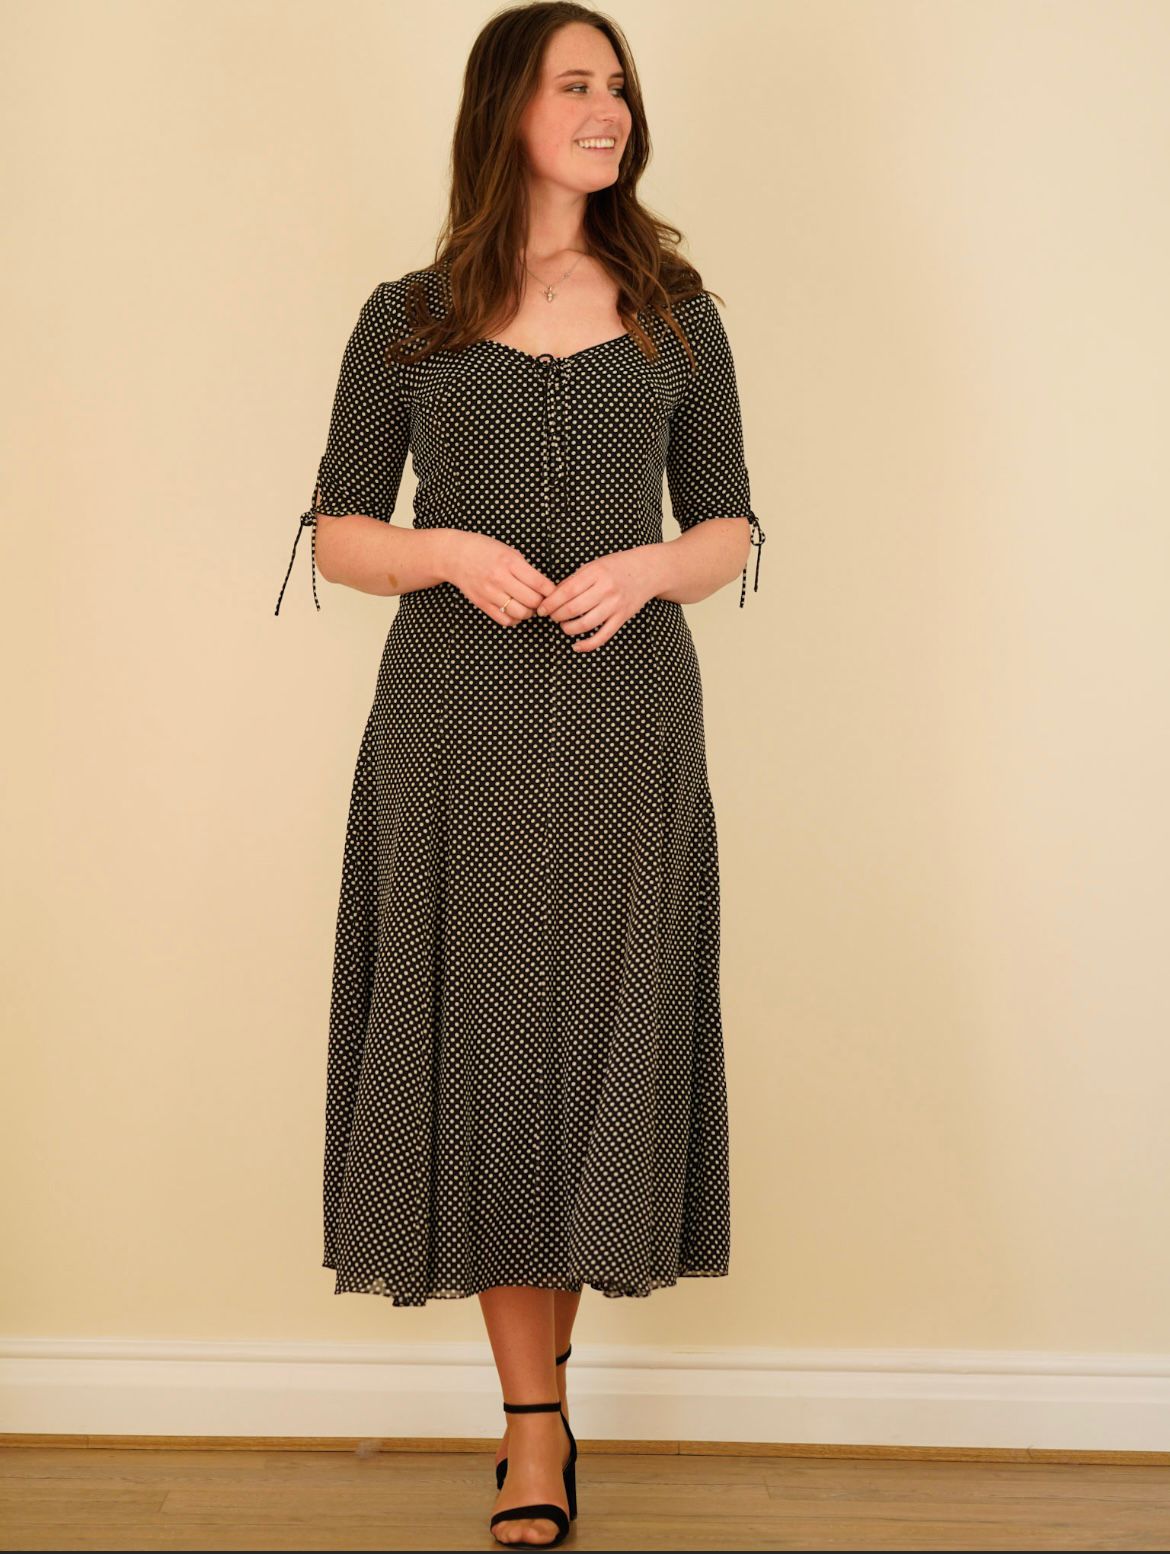 Vintage Caroline Charles black and white polka dot dress size GB 12